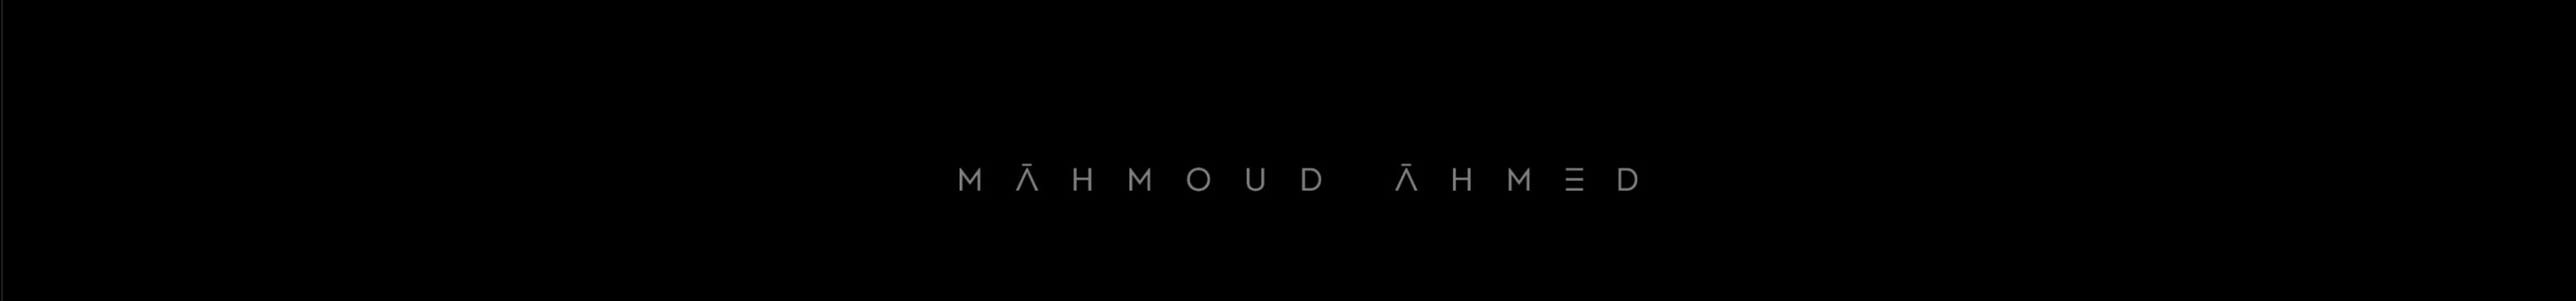 MAHMOUD AHMED profil başlığı